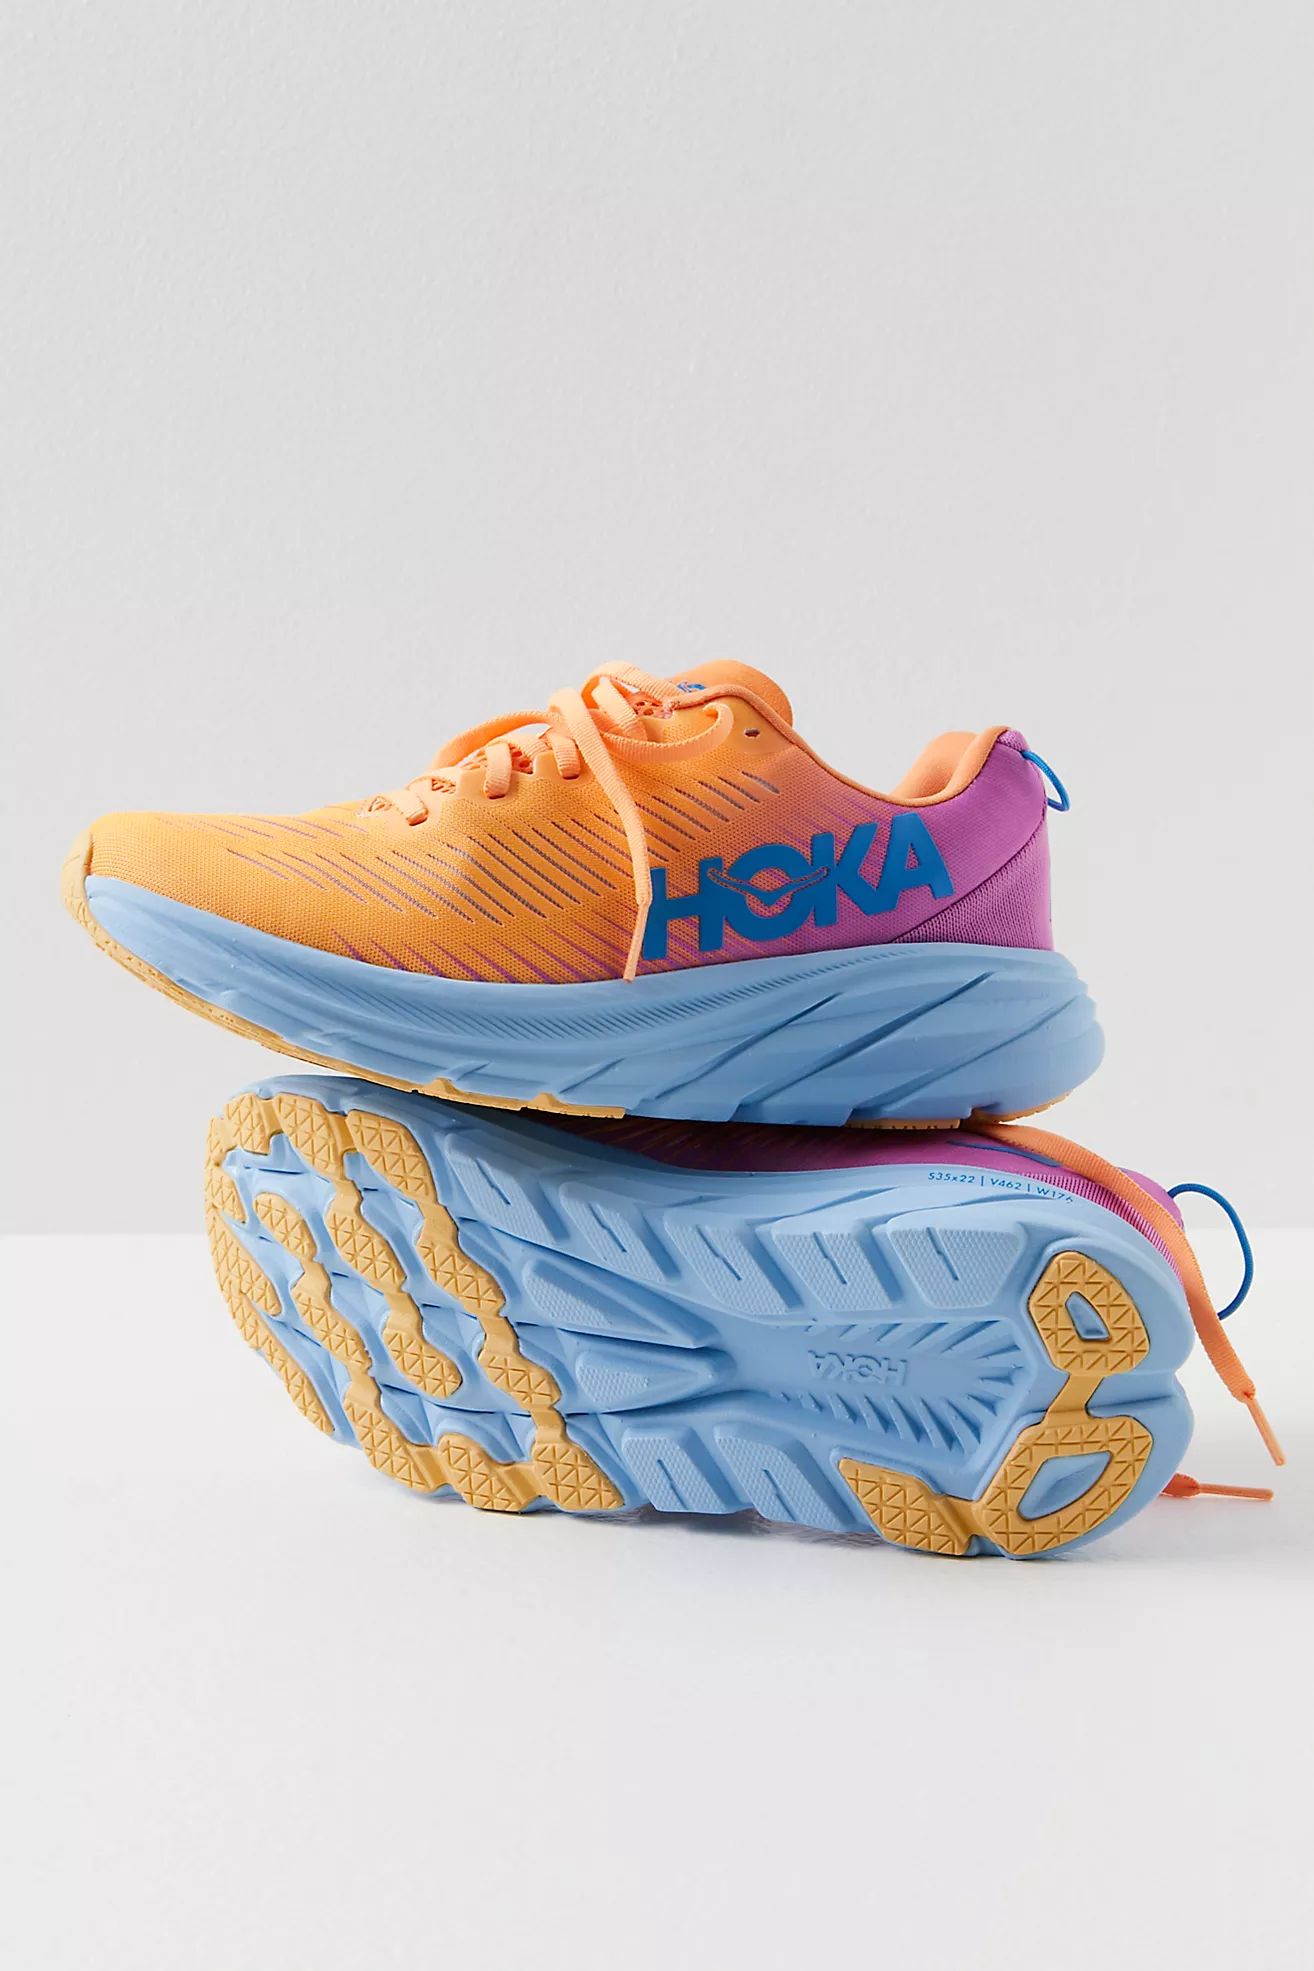 HOKA Rincon 3 Sneakers | Free People (Global - UK&FR Excluded)